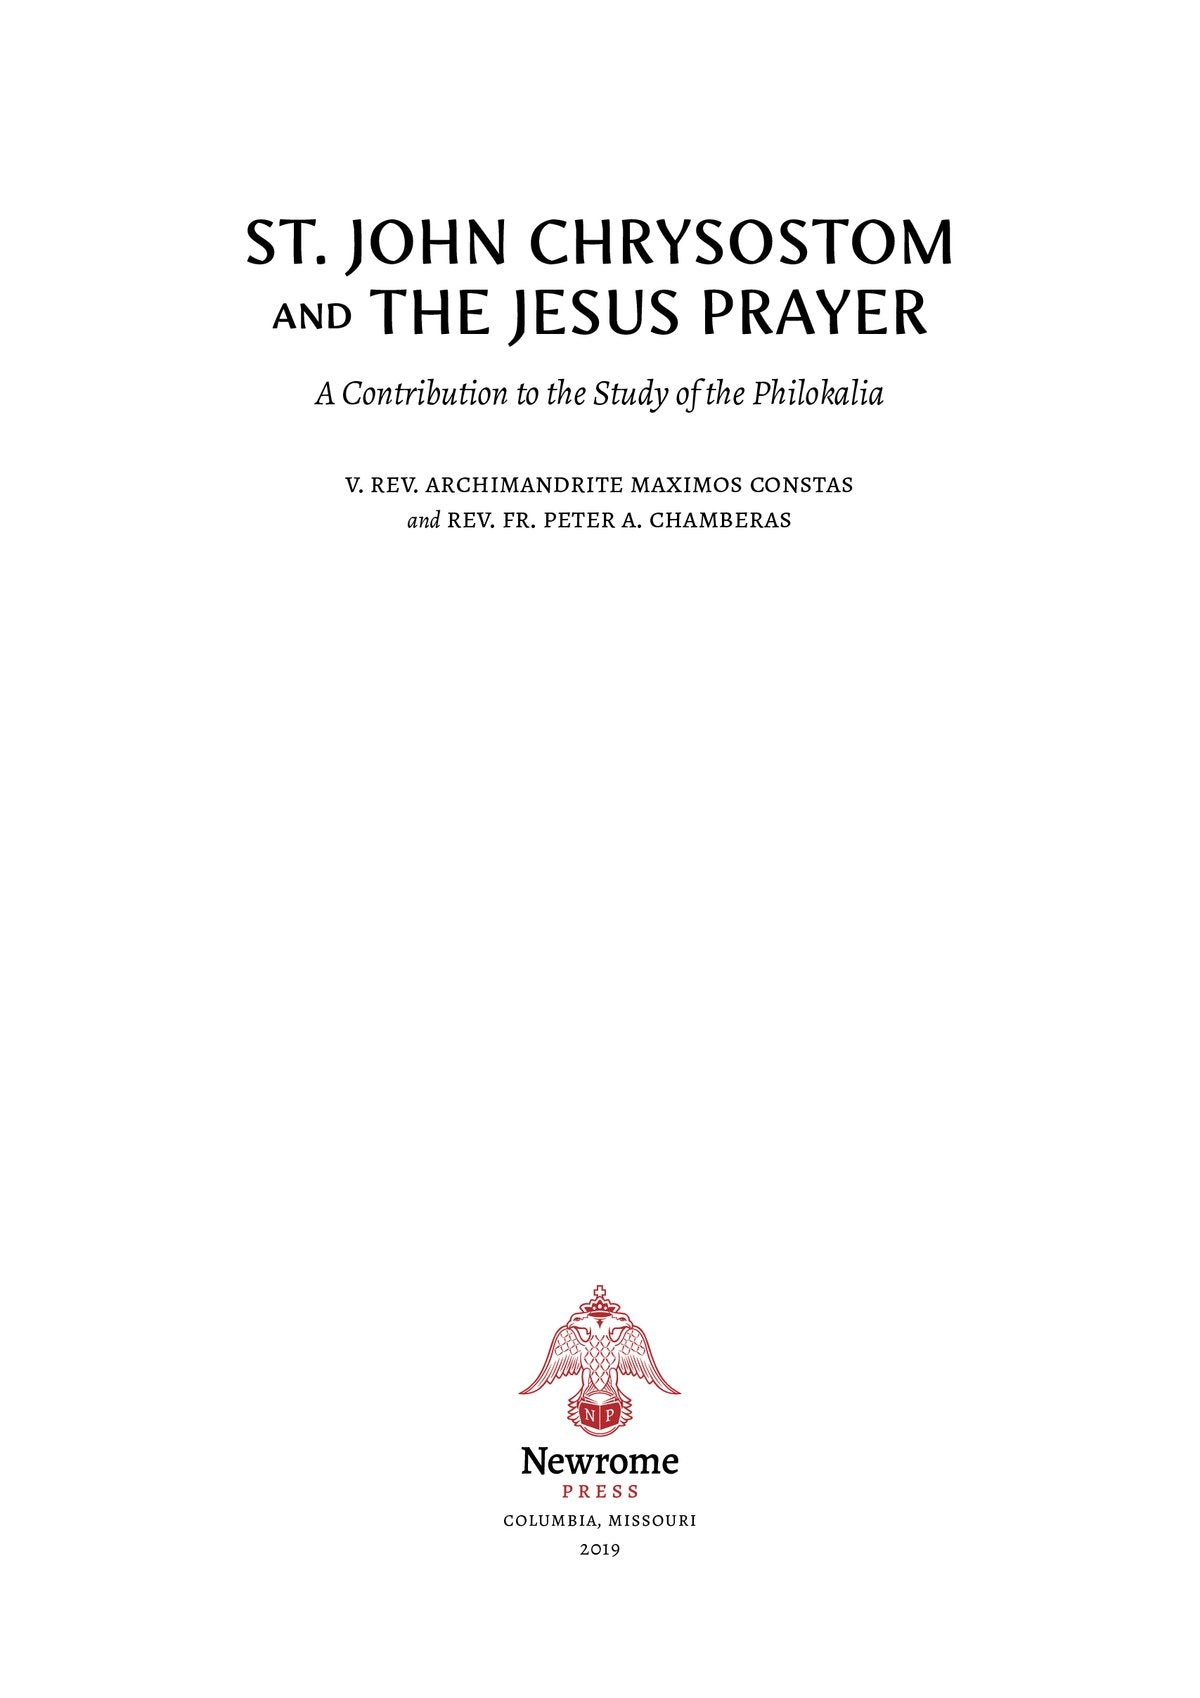 St. John Chrysostom and the Jesus Prayer